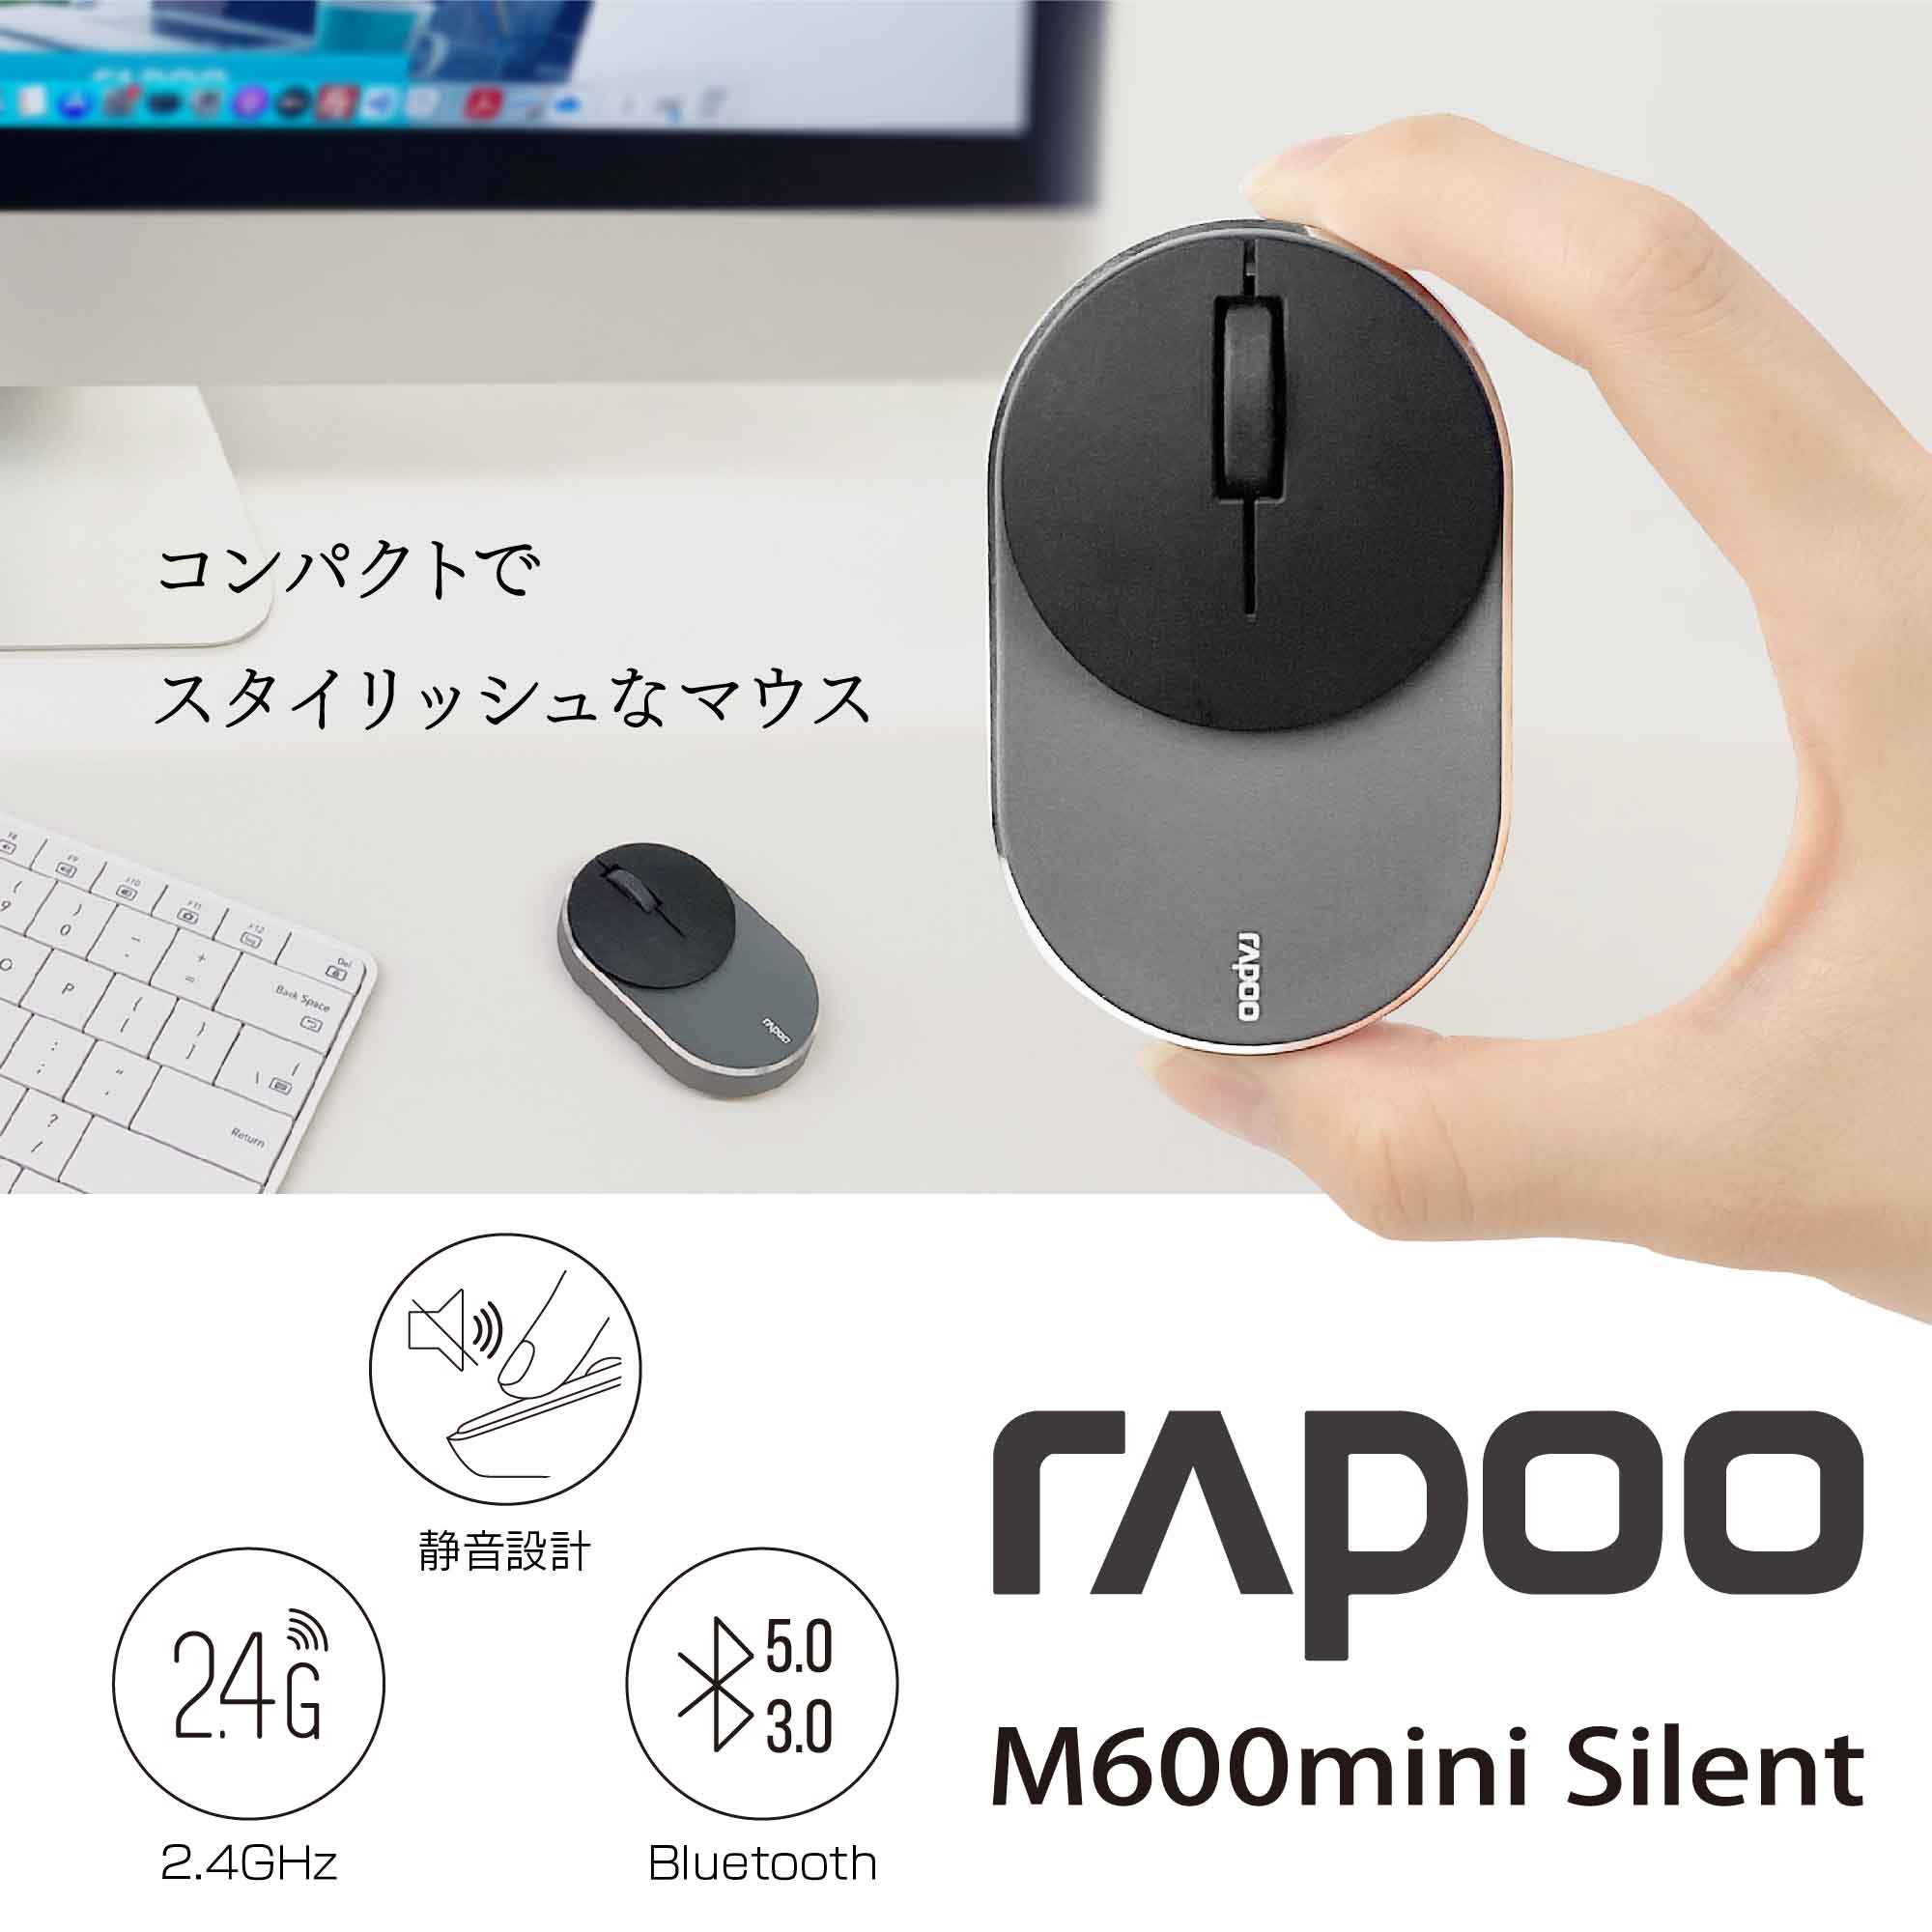 Rapoo M600mini Bluetooth / 2.4GHz マルチデバイス対応 pcマウス ワイヤレス ワイヤレスマウス おしゃれ ブルートゥースマウス パソコンマウス 静音マウス ノート パソコン 用 マウス 小型 超…